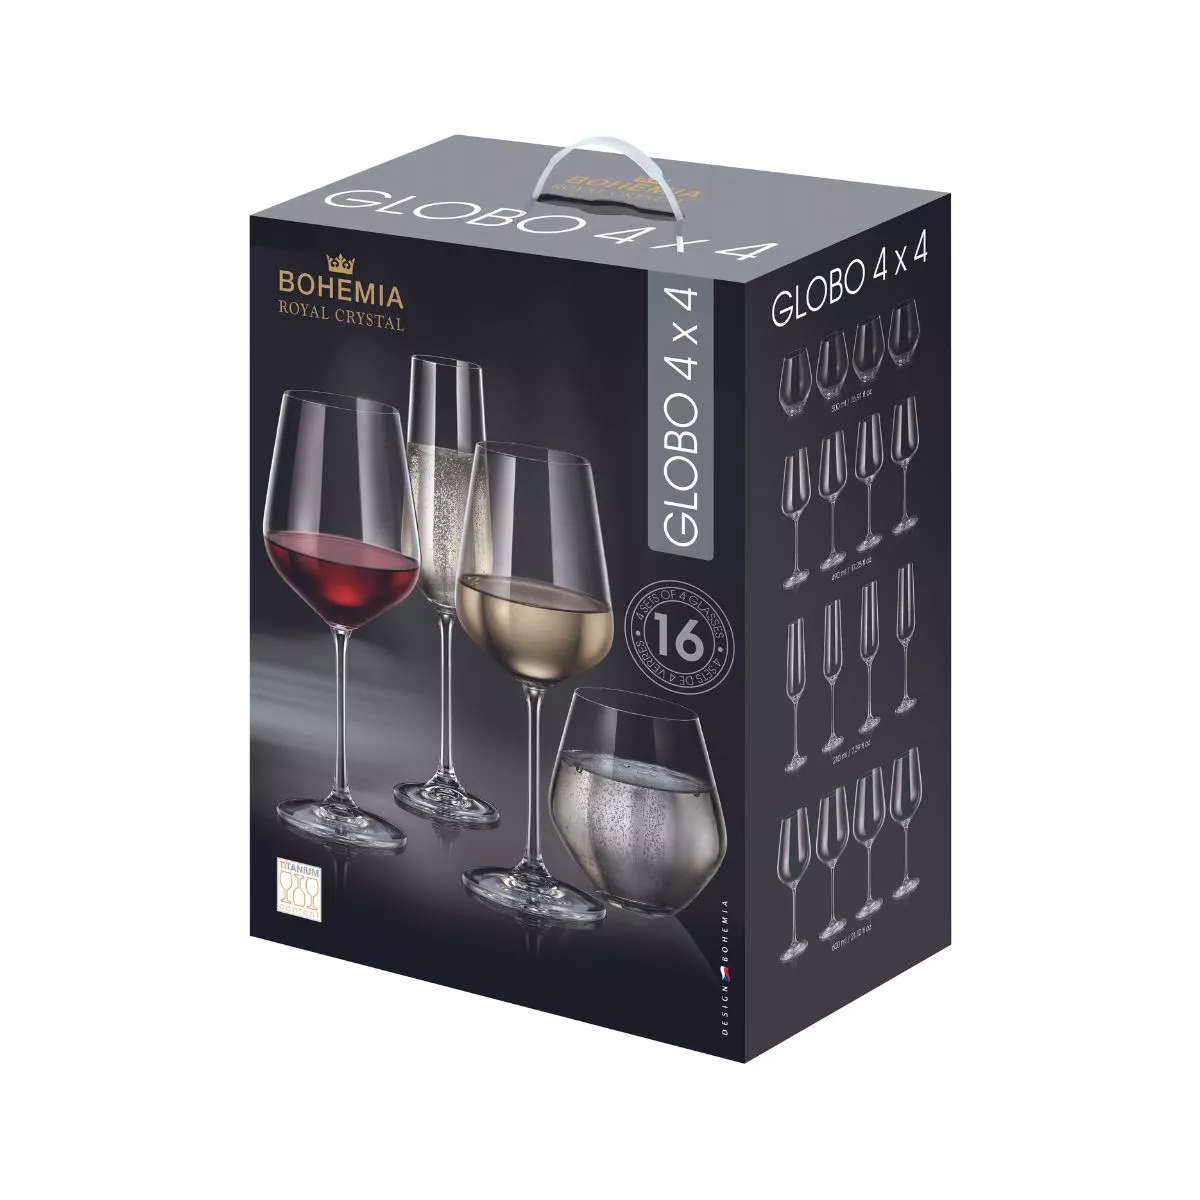 Set de 16 pahare pentru vin rosu, vin alb, sampanie si apa, transparent, din cristal de Bohemia, 500/490/210/600 ml, Globo 1